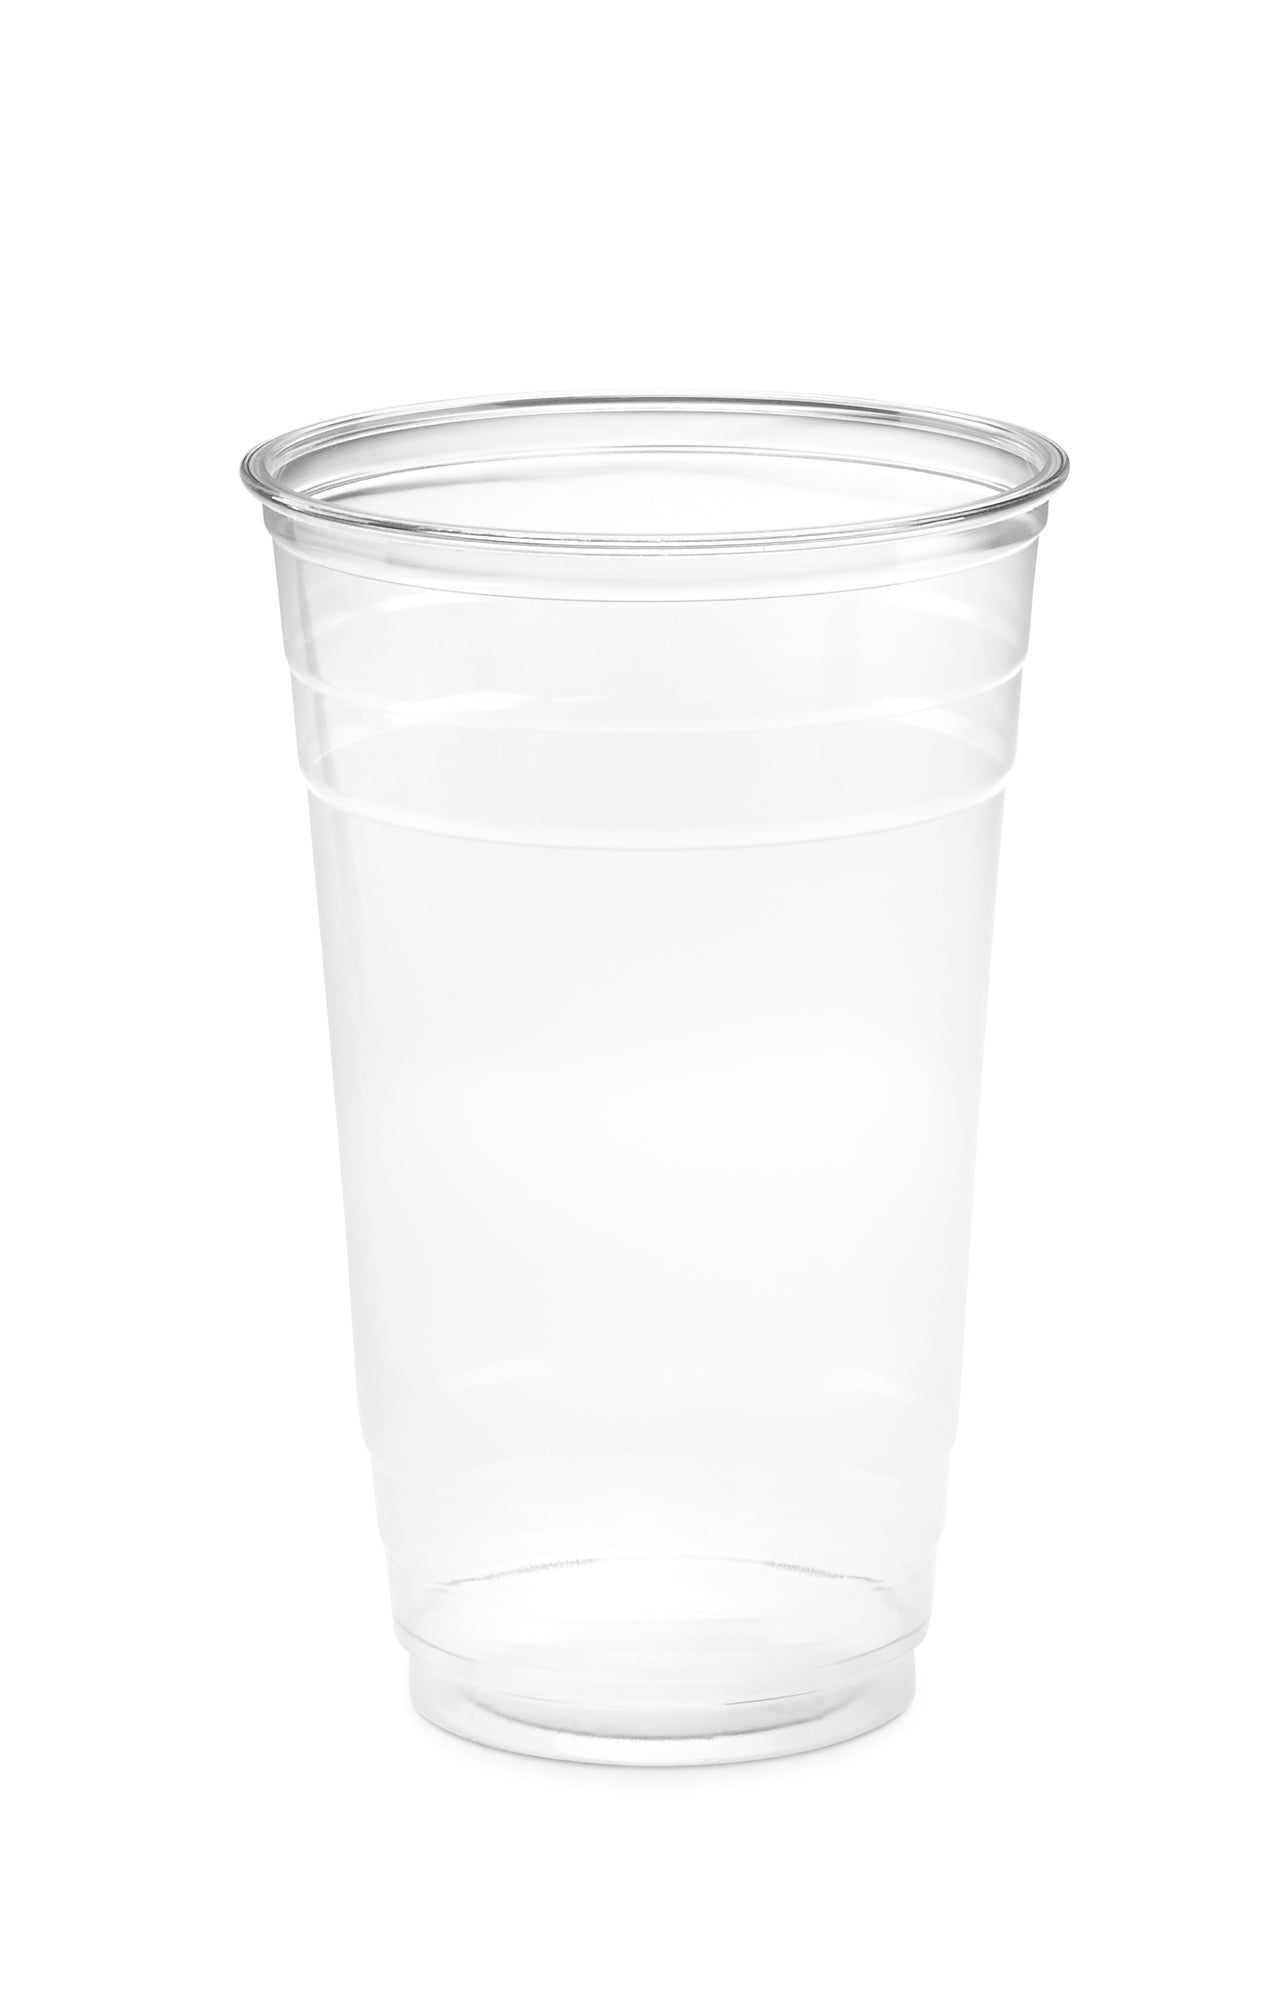 Crystal Clear ACR Plastic Cups 50ct Sleeve